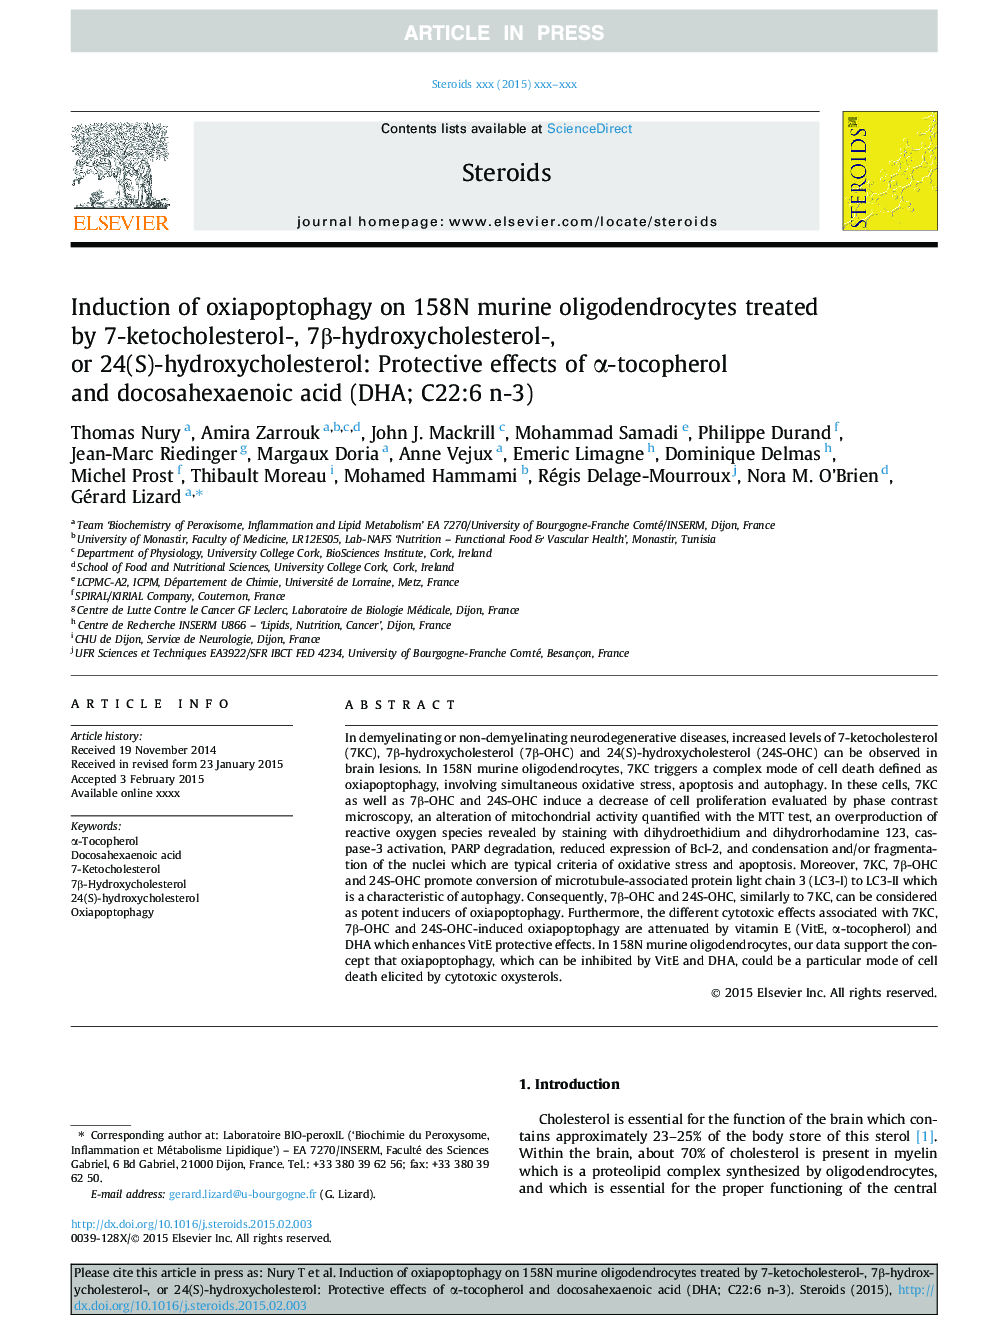 Induction of oxiapoptophagy on 158N murine oligodendrocytes treated by 7-ketocholesterol-, 7Î²-hydroxycholesterol-, or 24(S)-hydroxycholesterol: Protective effects of Î±-tocopherol and docosahexaenoic acid (DHA; C22:6 n-3)